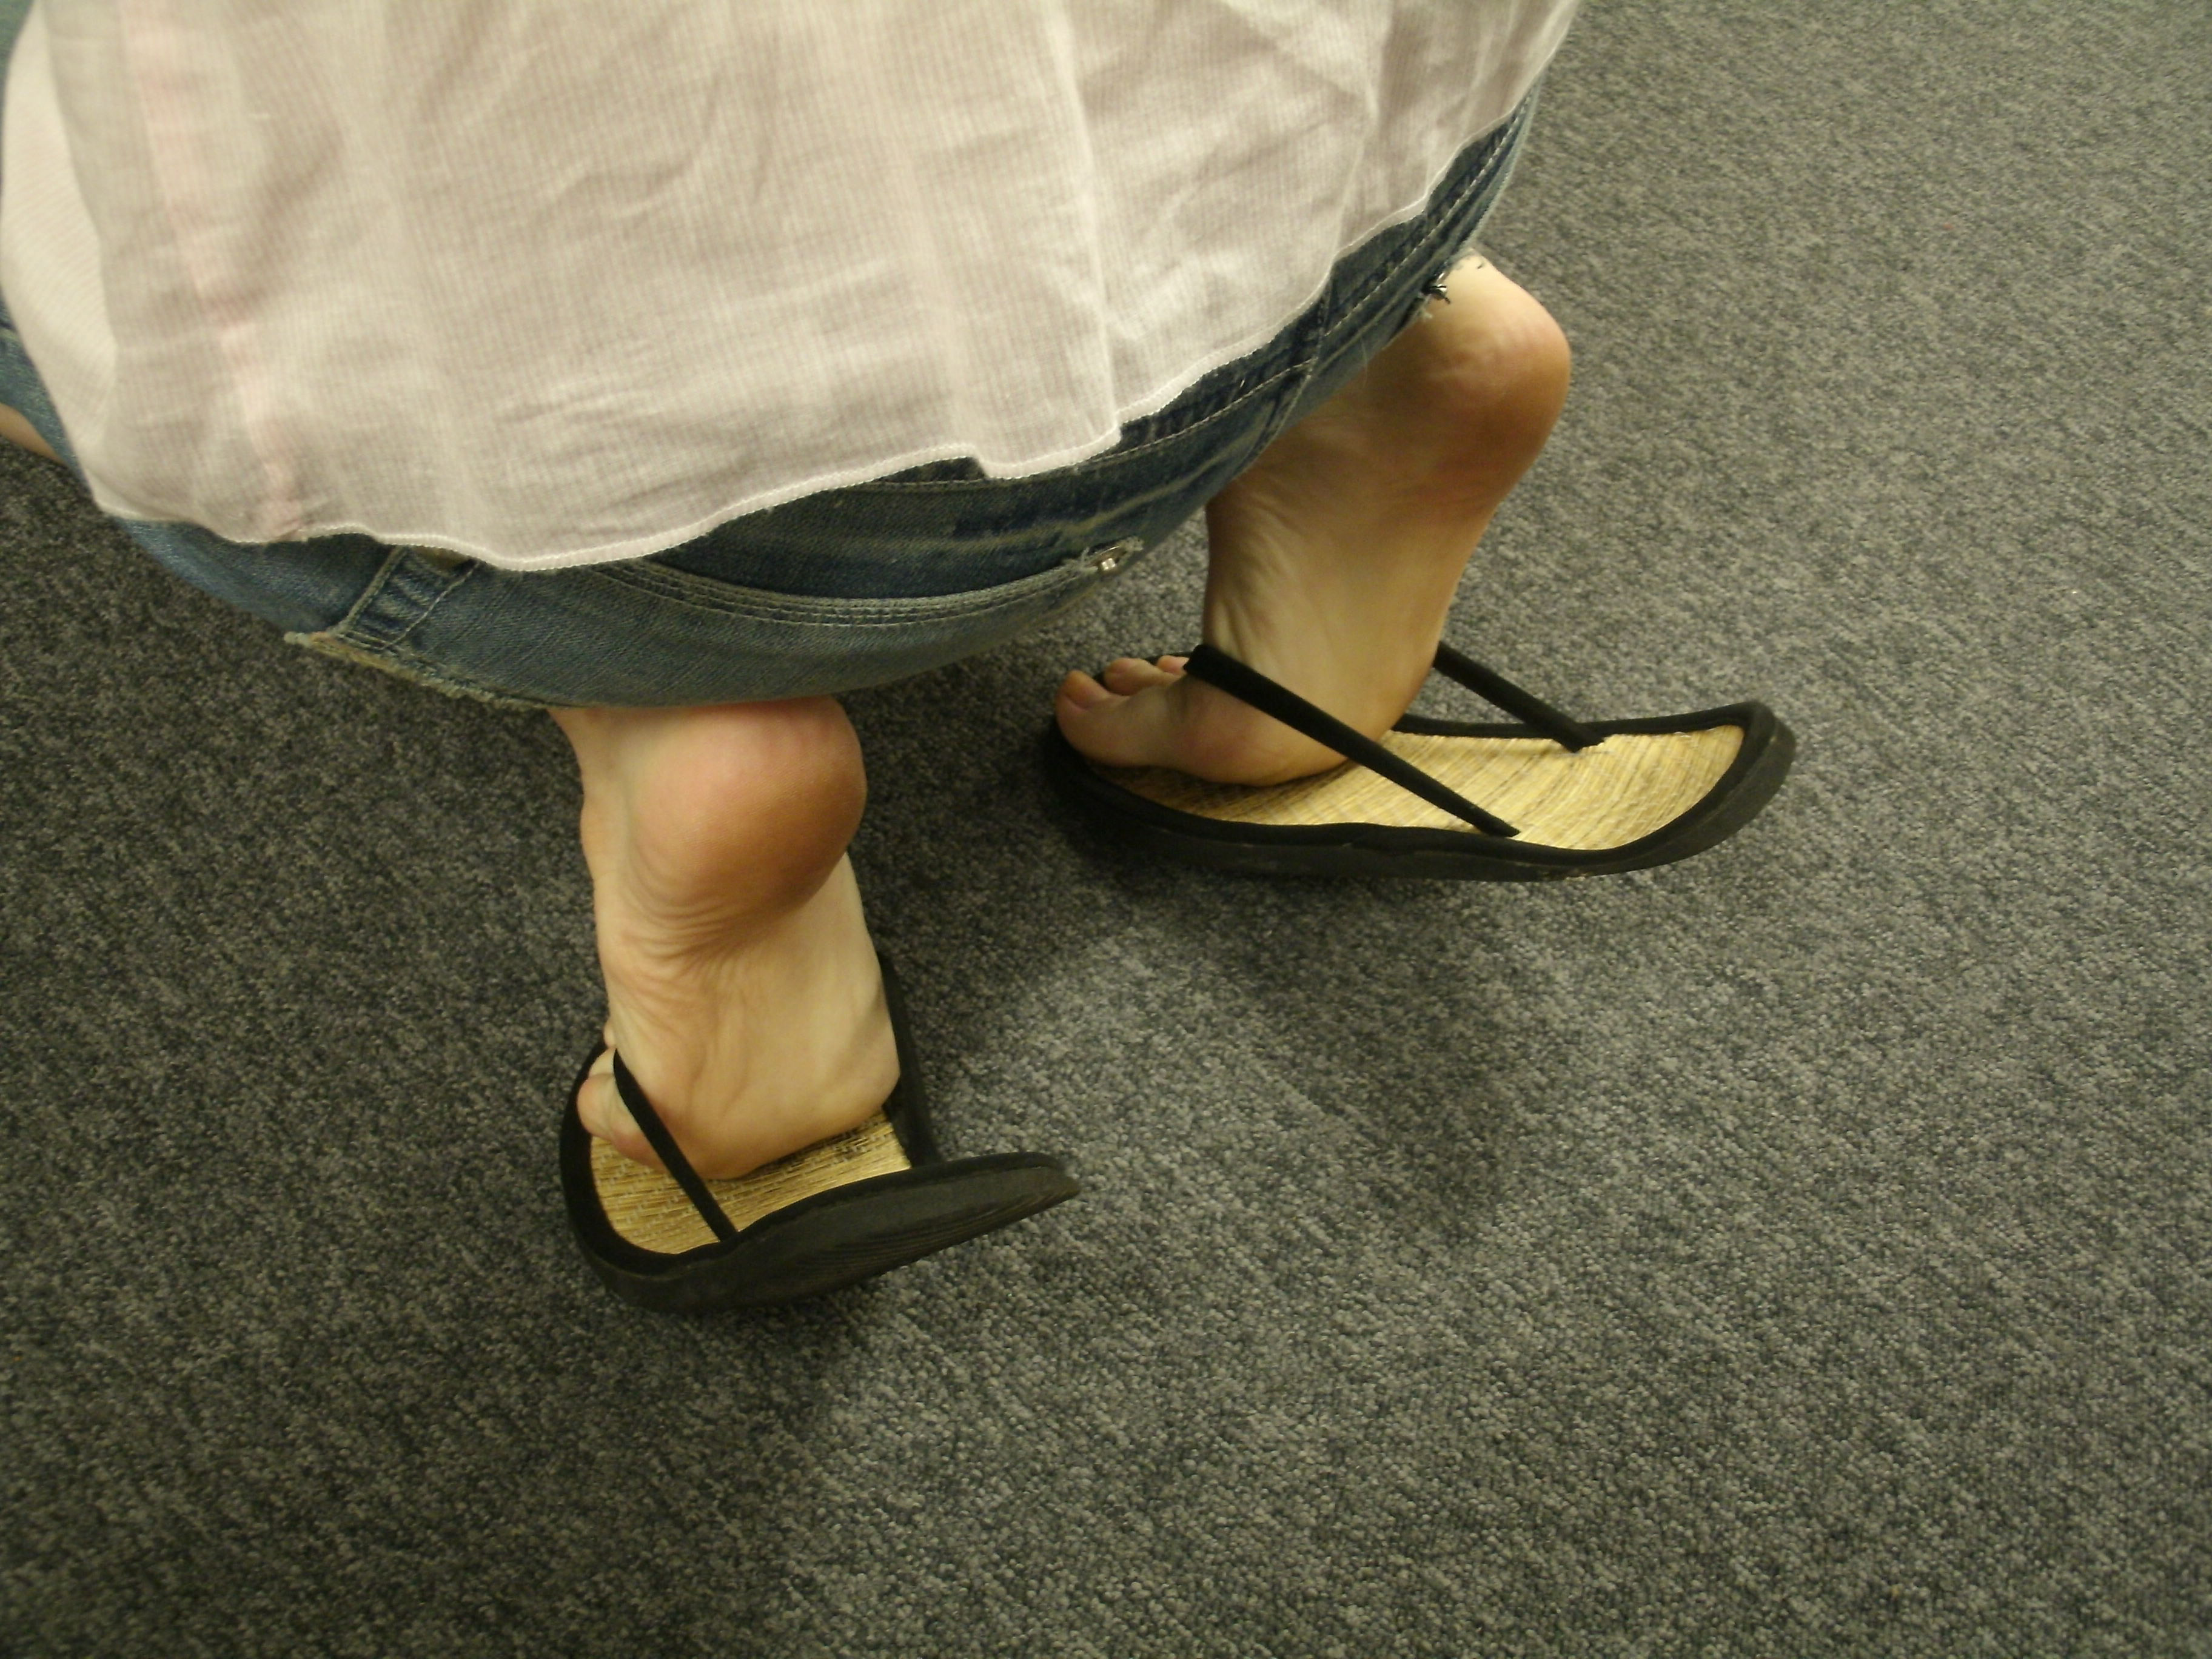 This Week's Theme: Sandals & Heels : feet